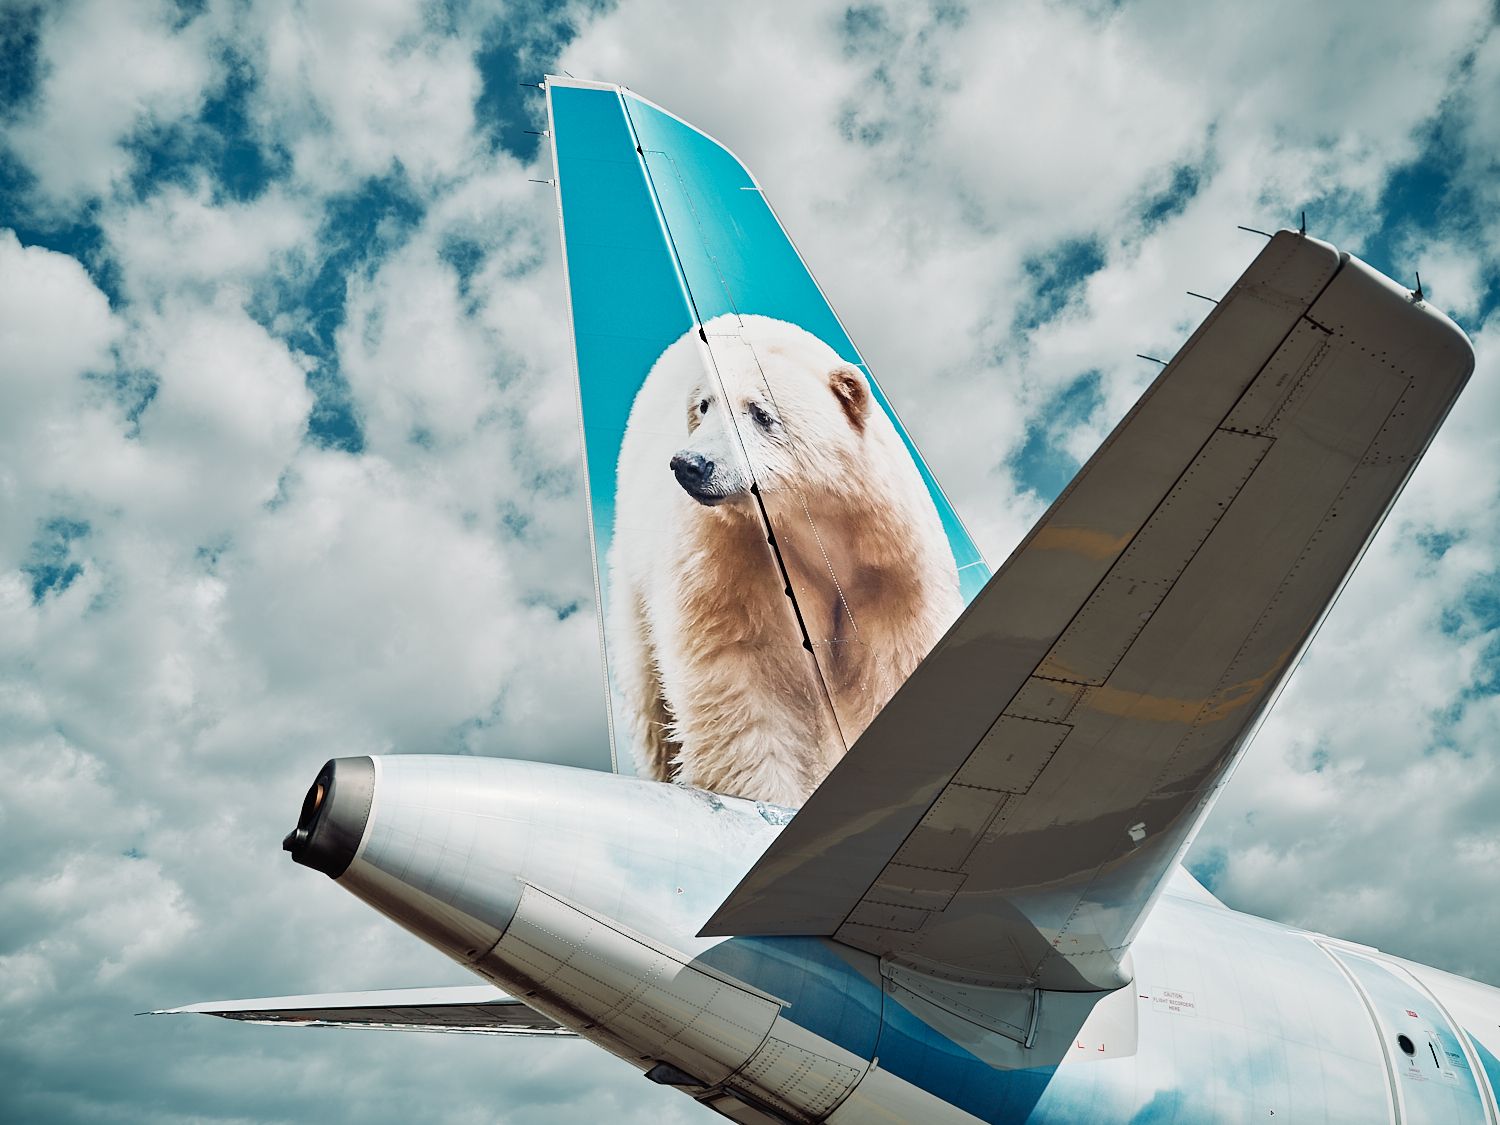 An Image of a polar bear on an aircrafts tail.